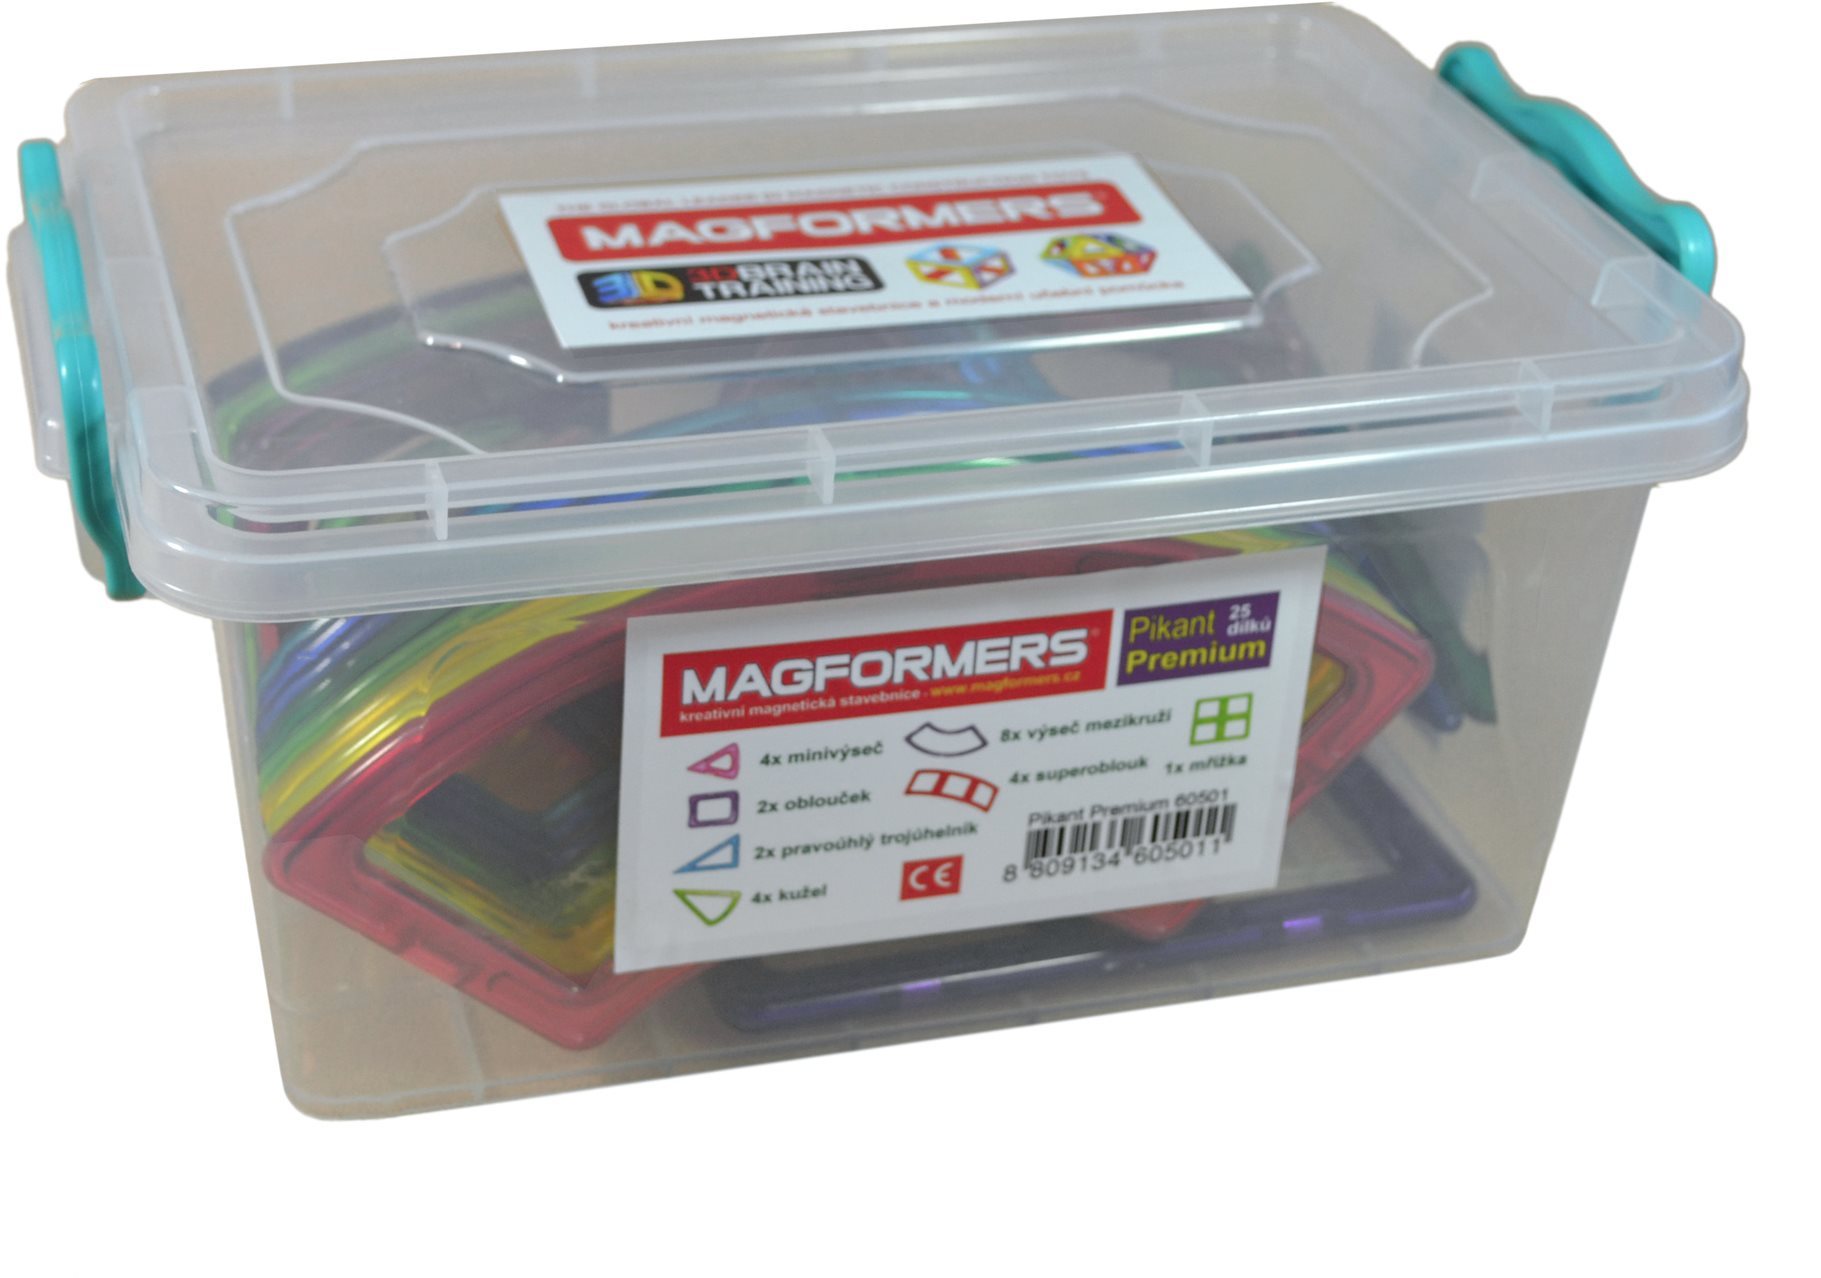 Building Set Magnetic Pikant Premium Packaging/box